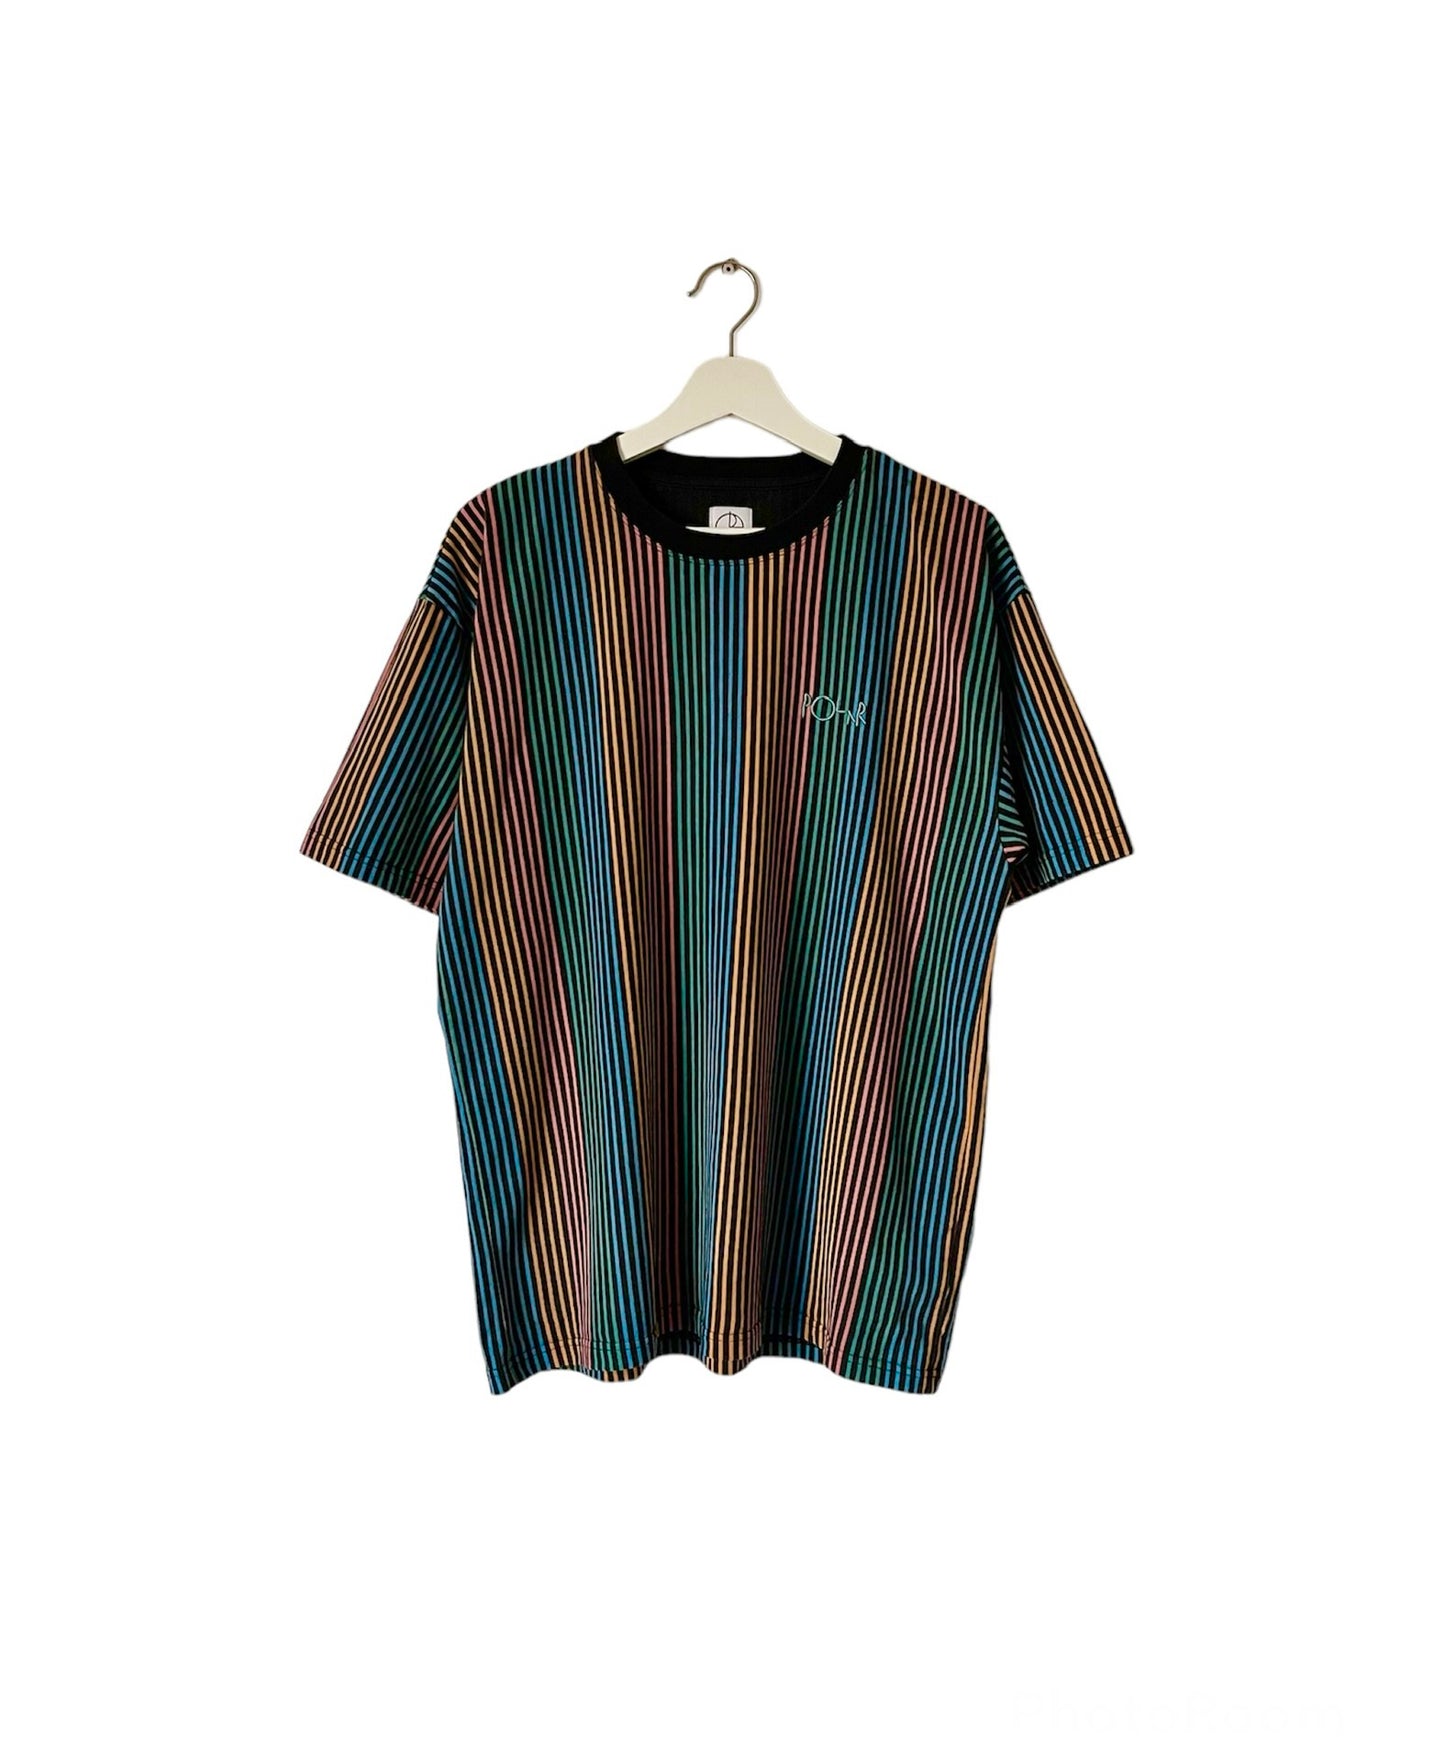 Polar Multi Striped T Shirt - Medium